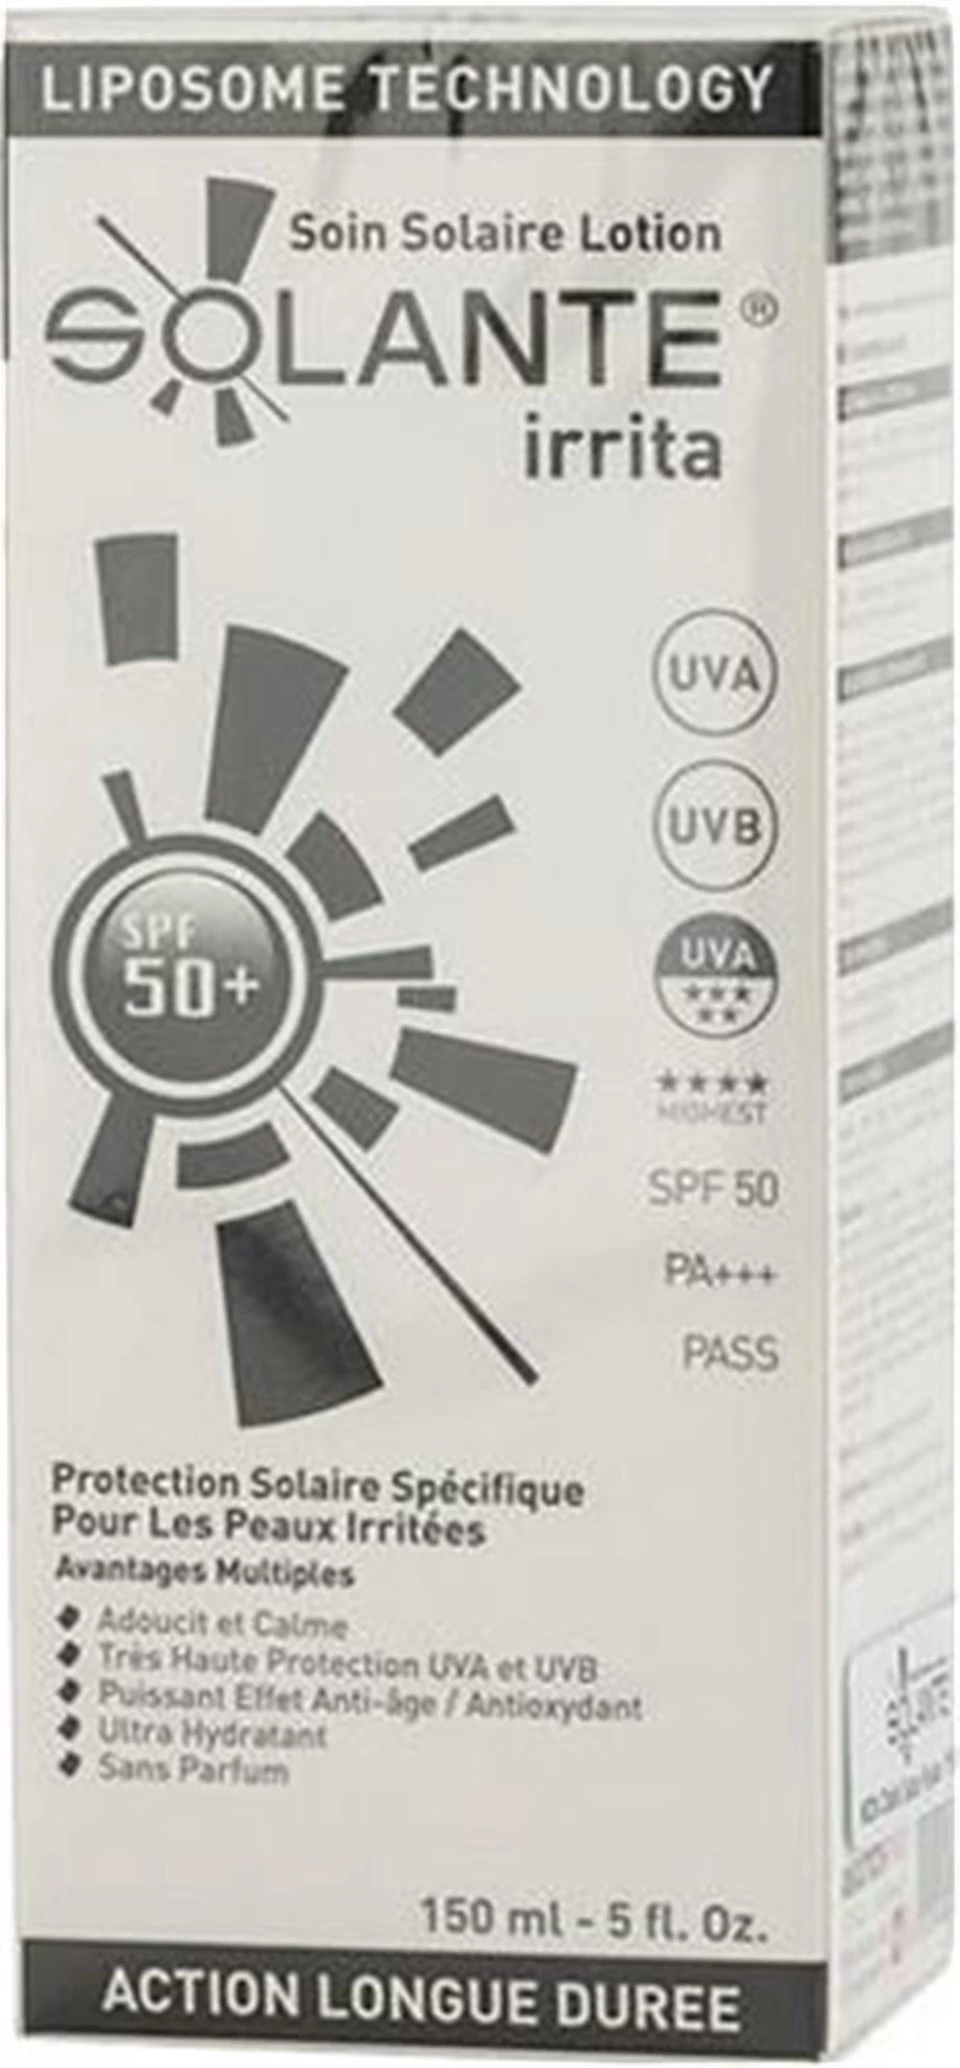 Solante Irrita Sun Care Lotion SPF50+ 150